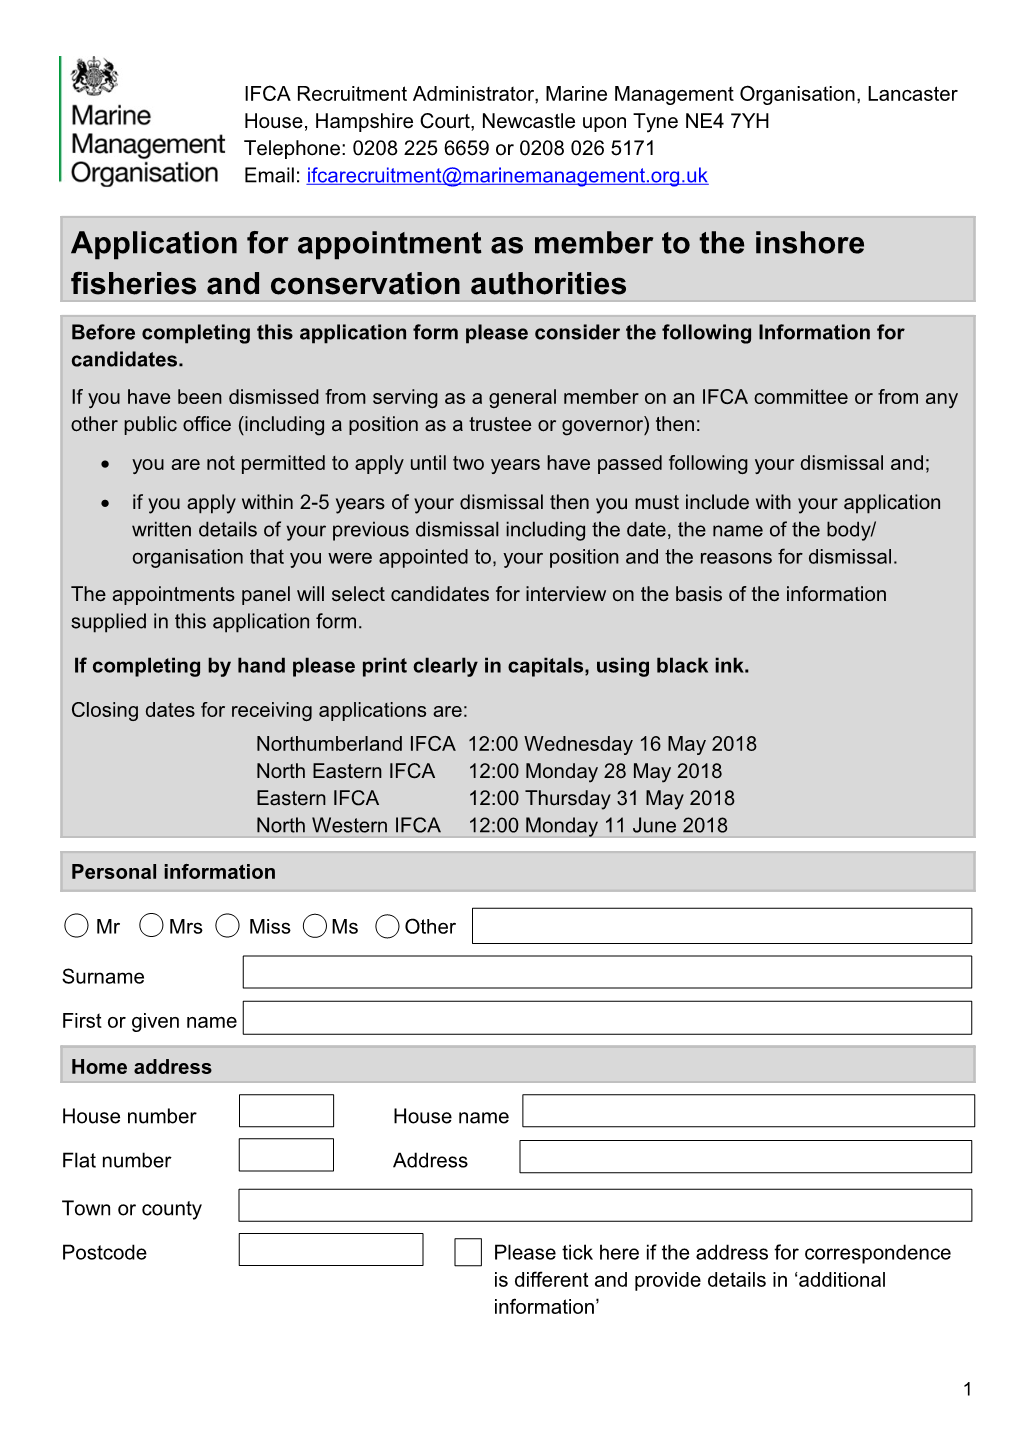 IFCA Recruitment Administrator, Marine Management Organisation, Lancaster House, Hampshire